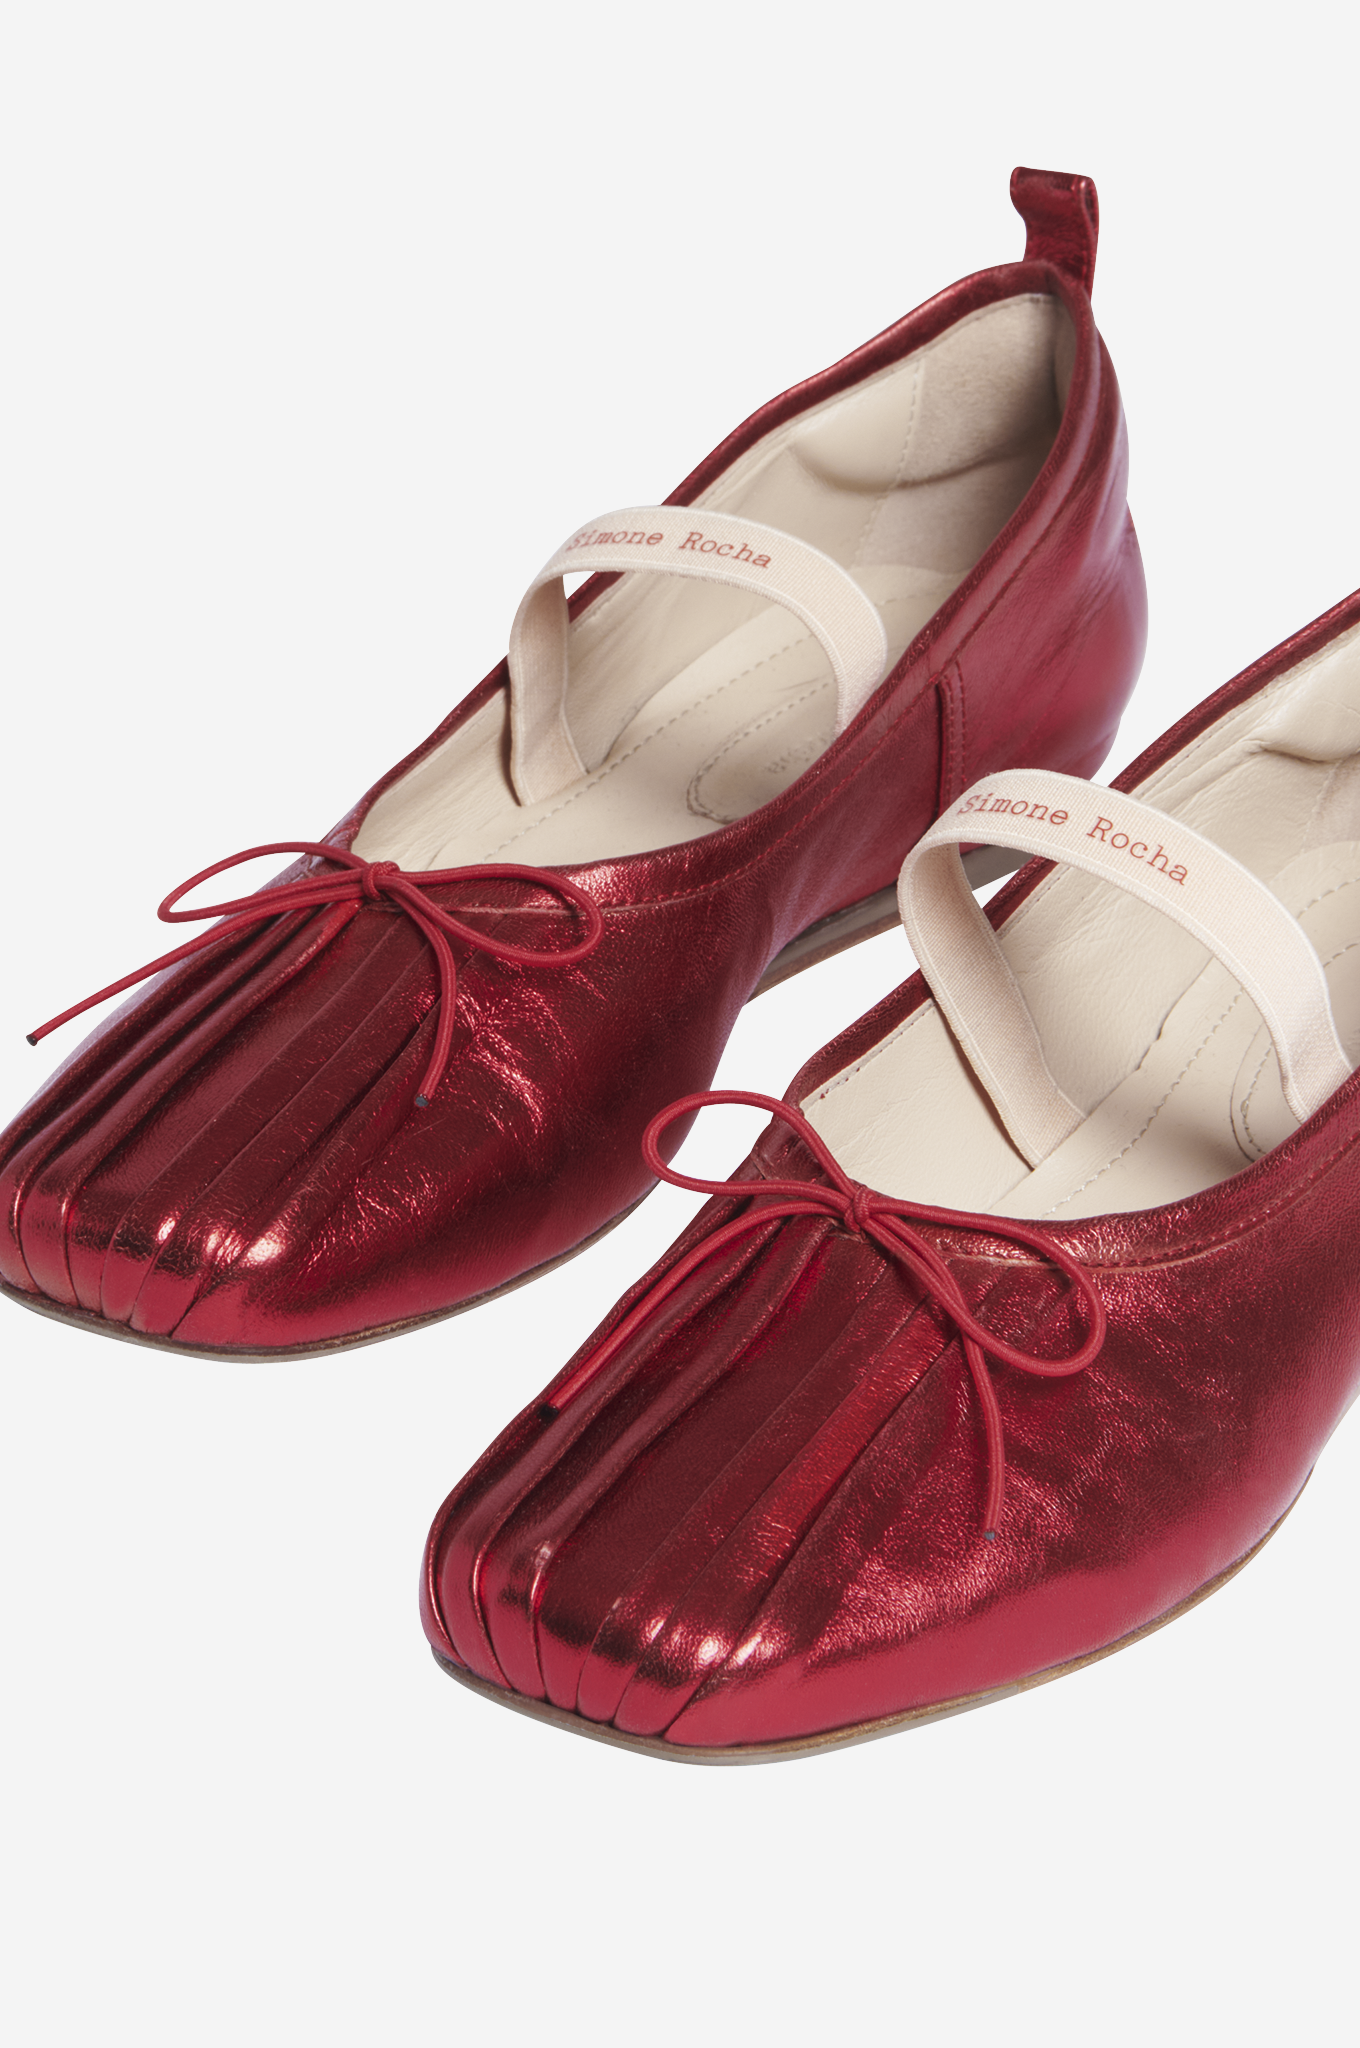 Simone Rocha Pink Heart Toe Ballerina Flats